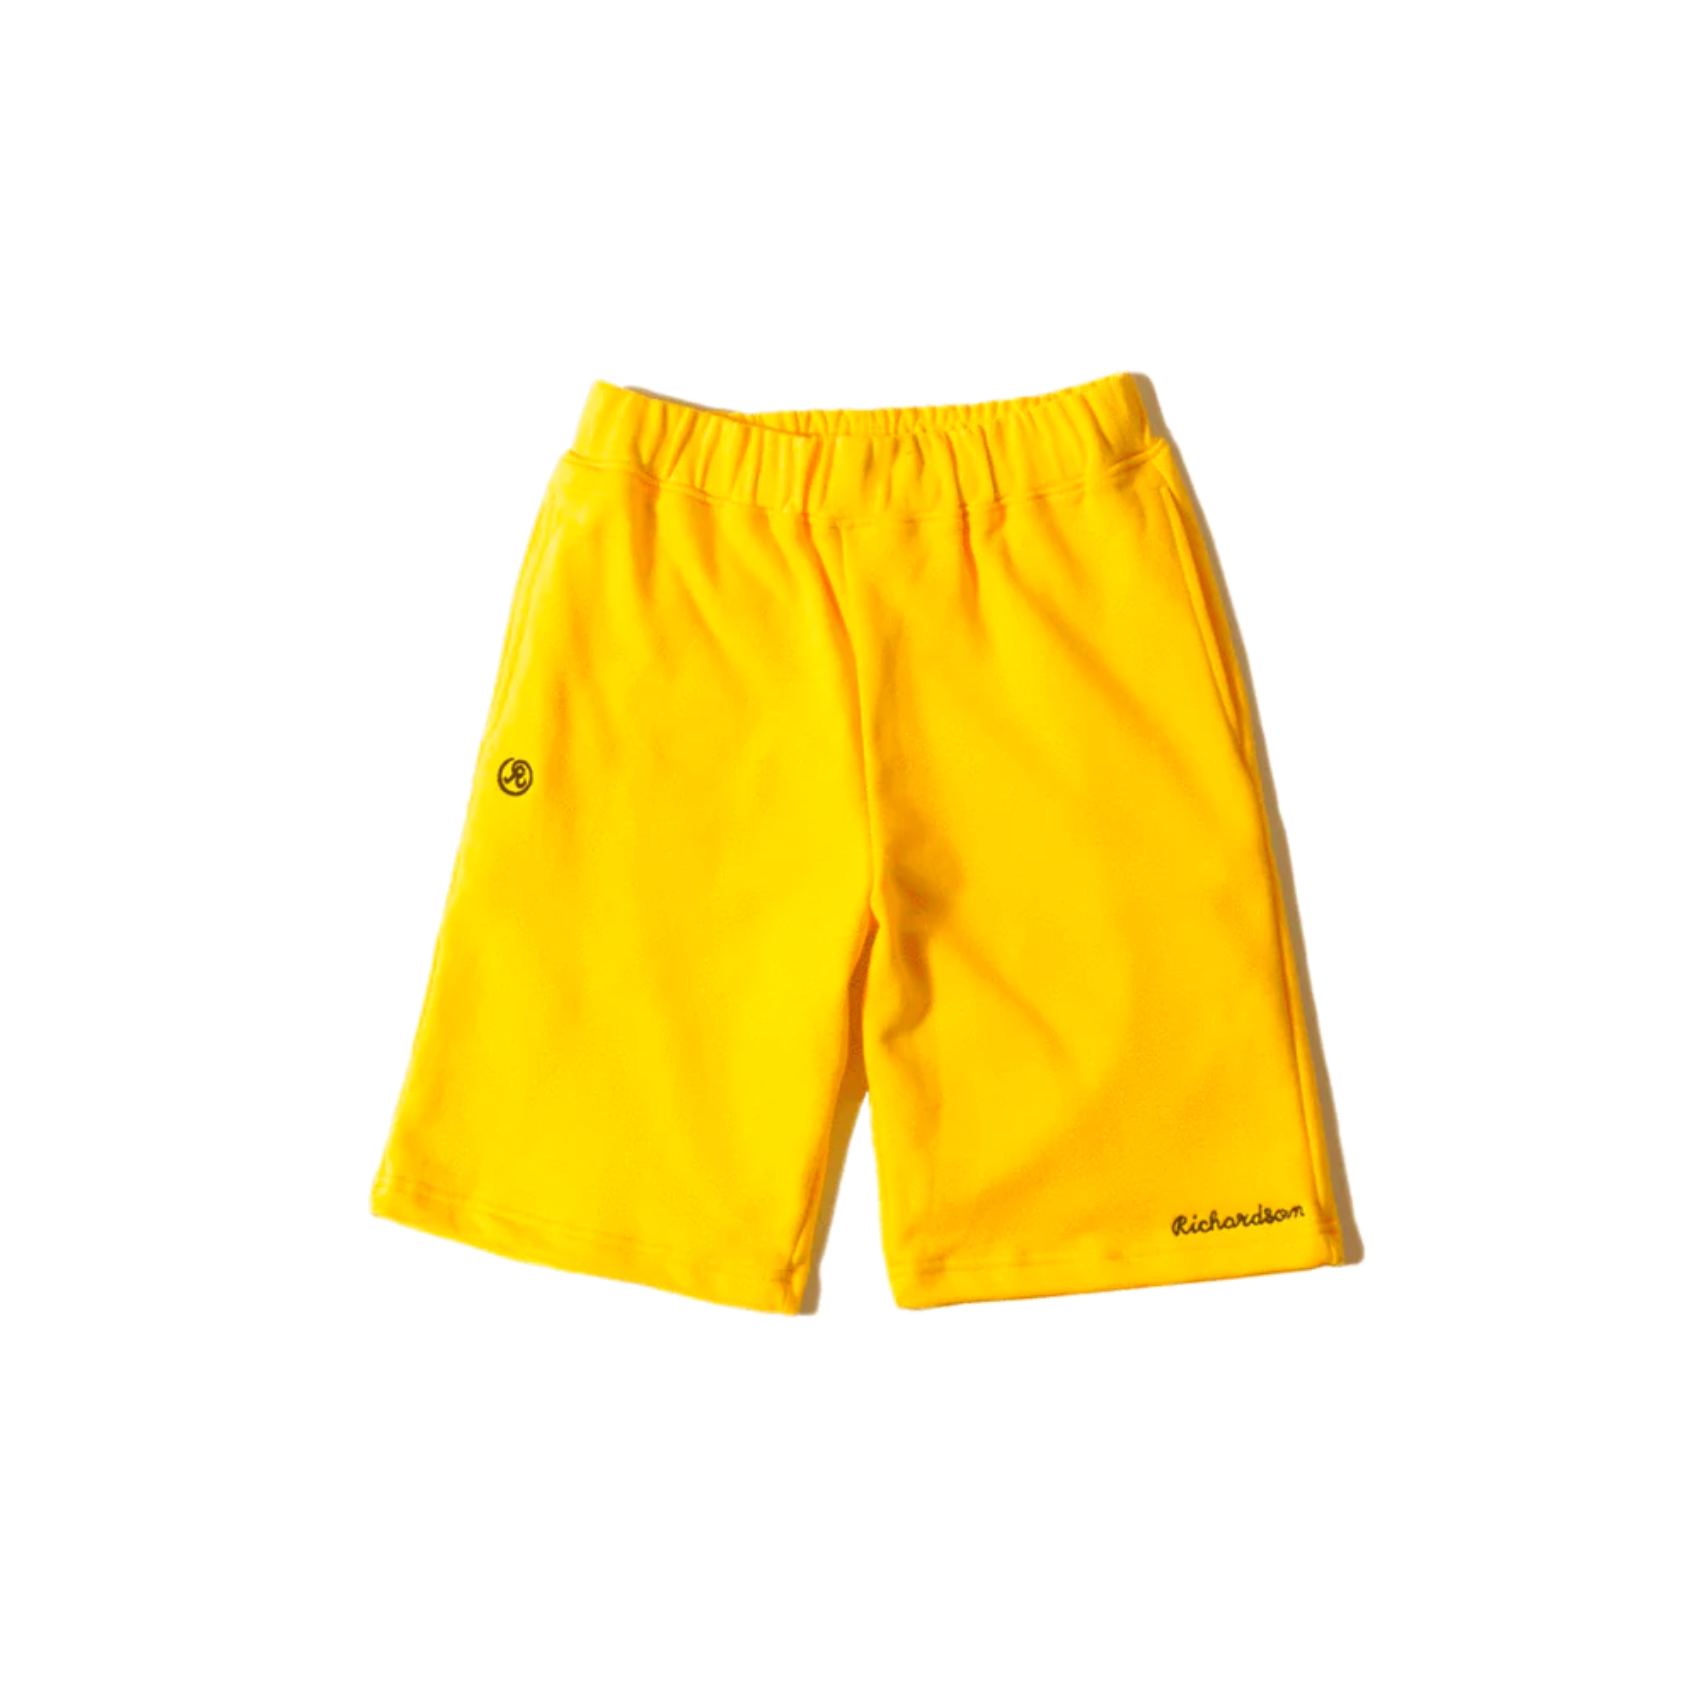 Simple Shorts - Yellow